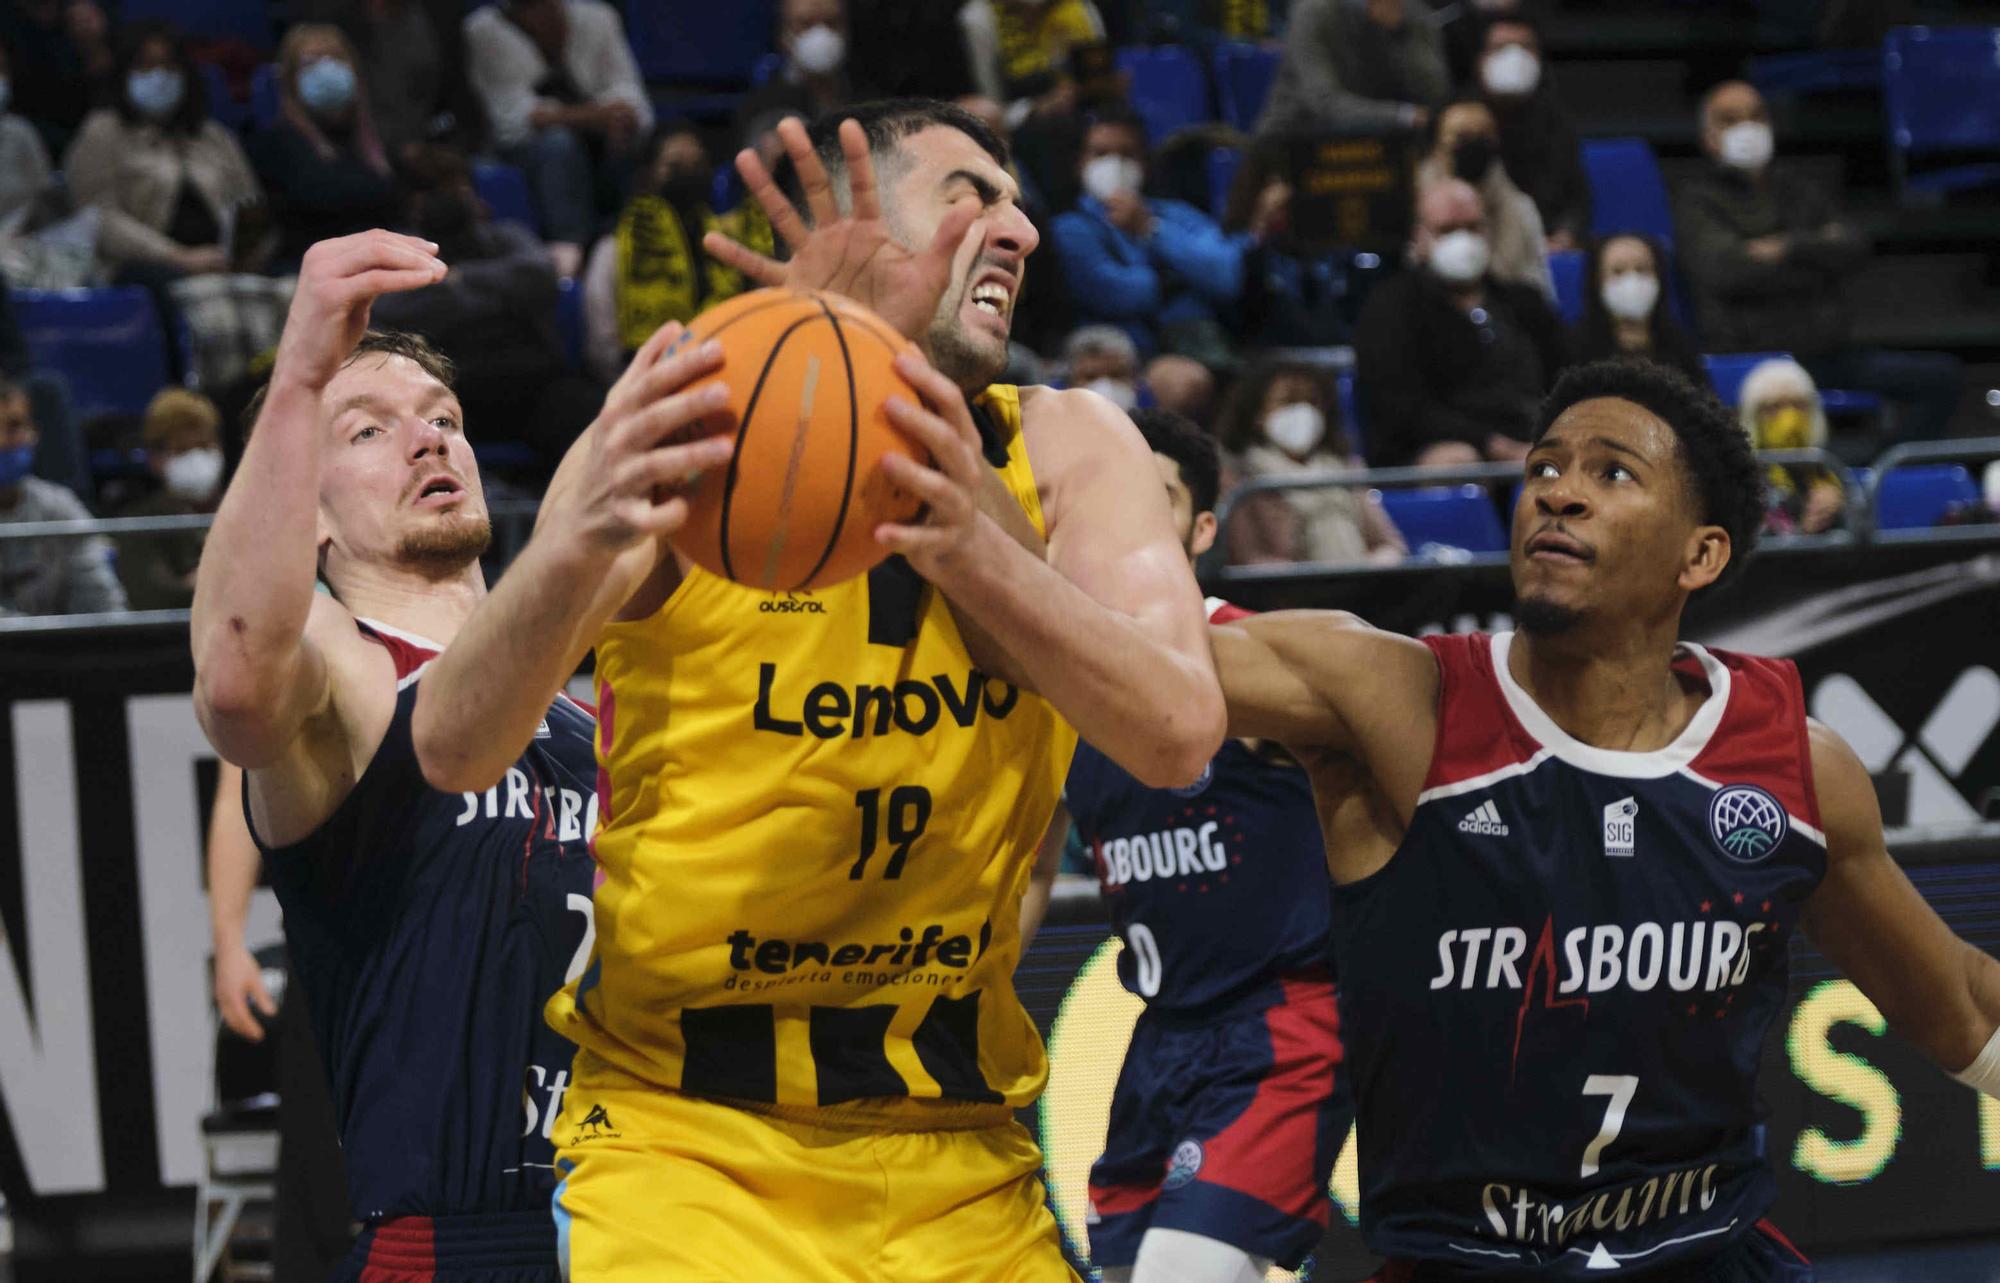 Partido Basketball Champions League: Lenovo Tenerife - SIG Strasbourg